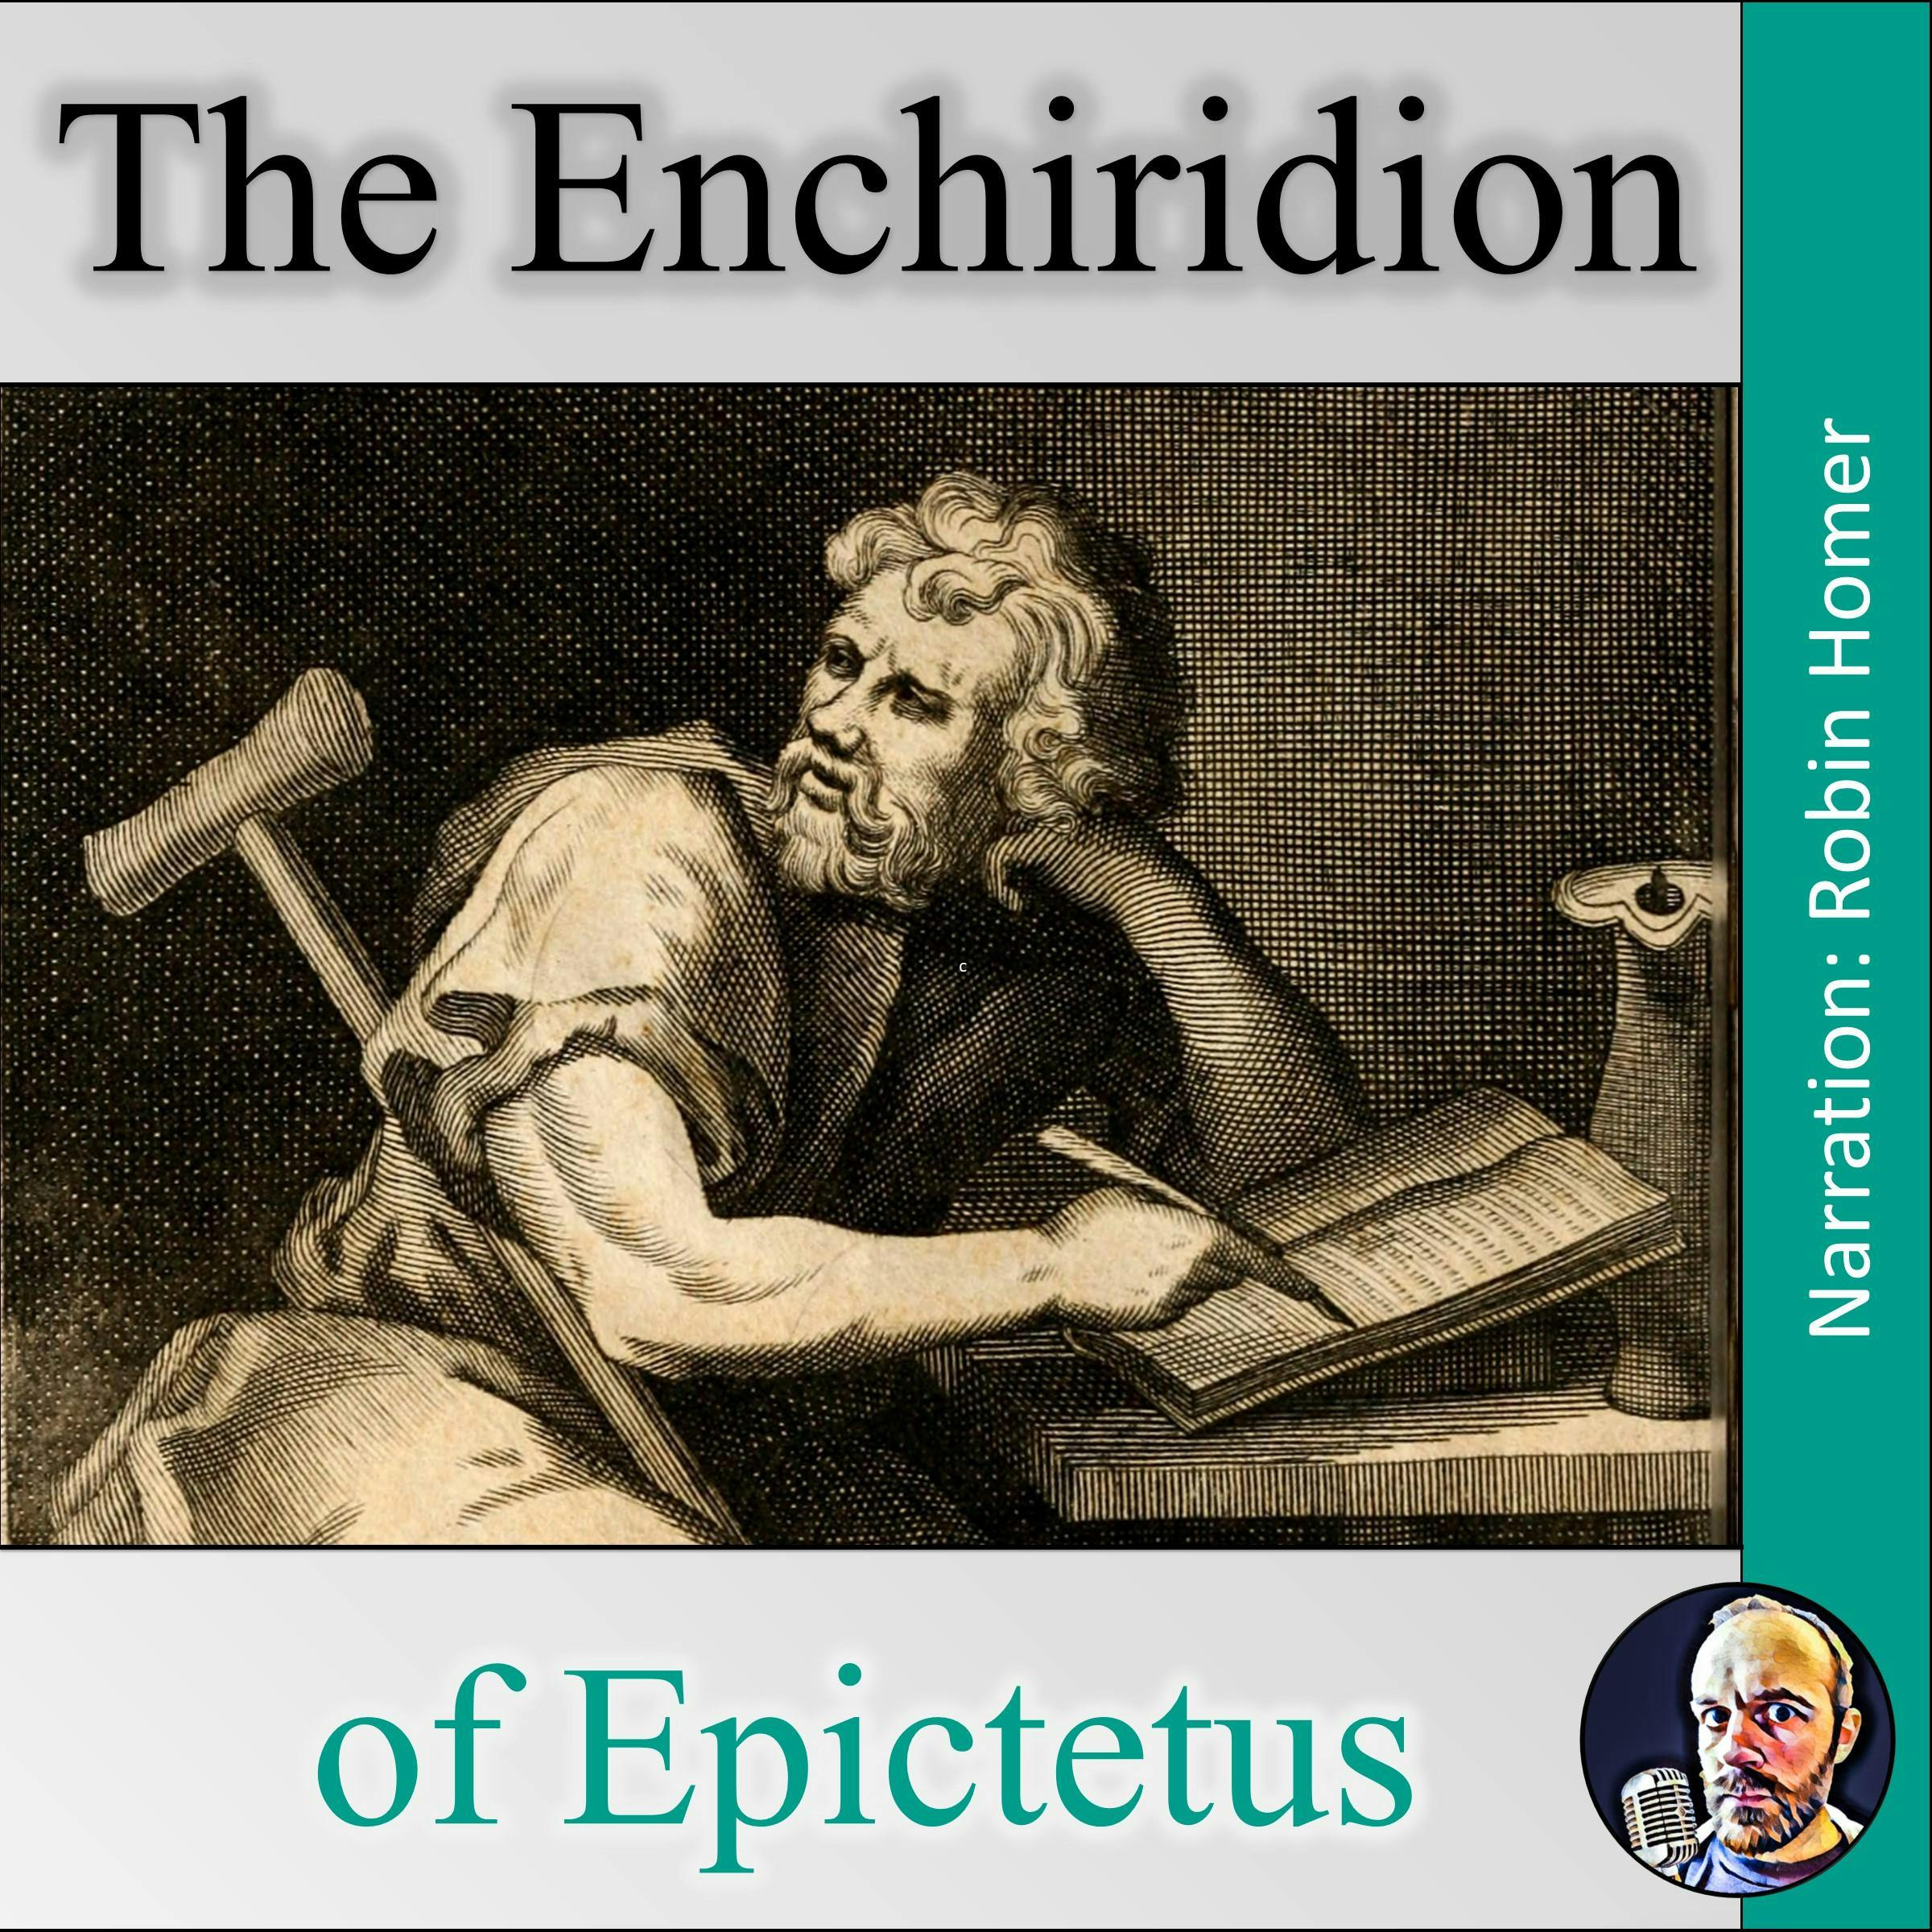 The Enchiridion of Epictetus - Arrian, Epictetus